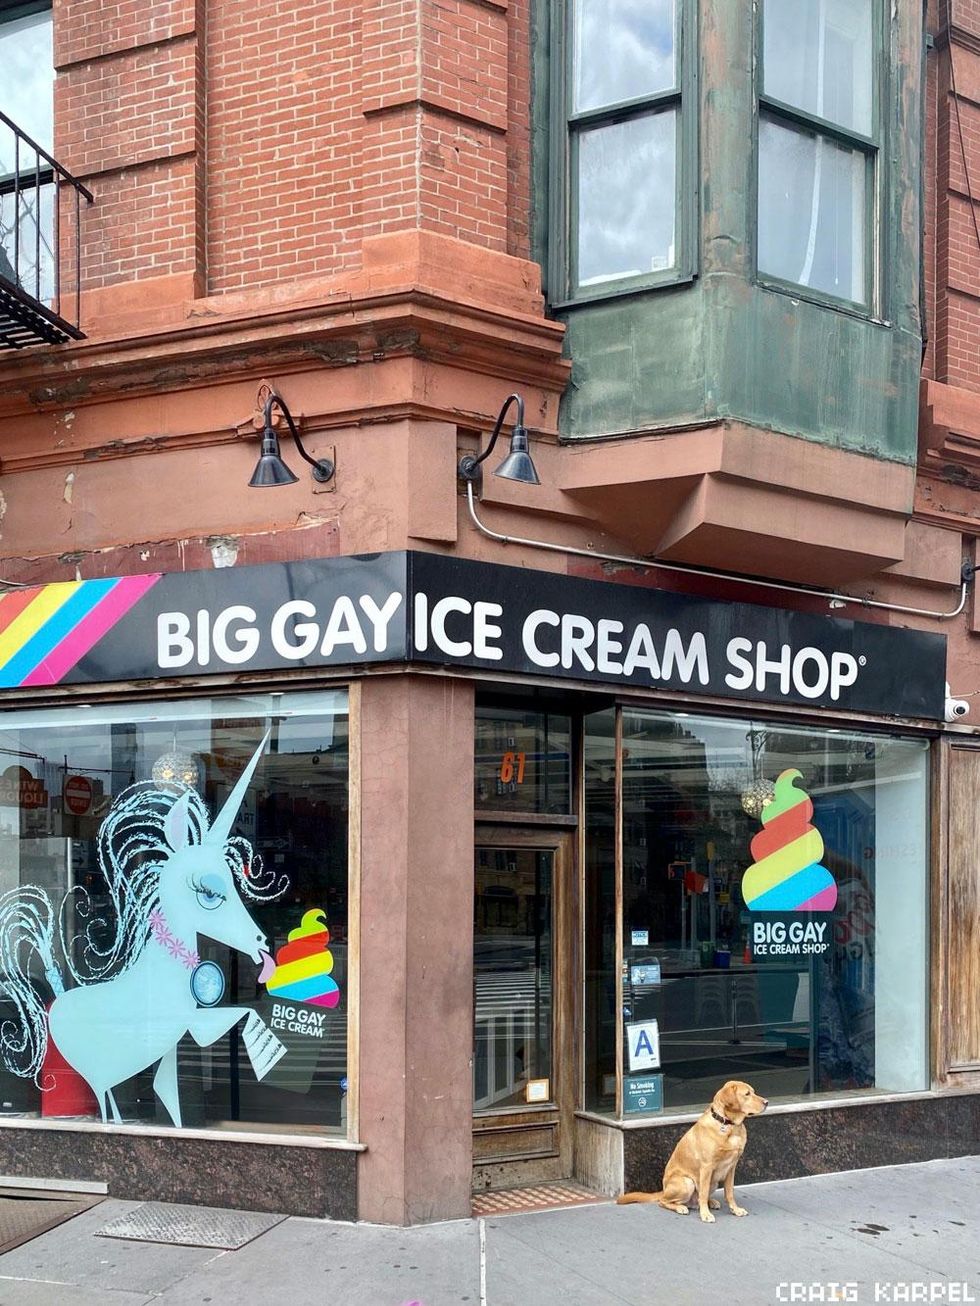 Who doesn't love Big Gay Ice Cream?